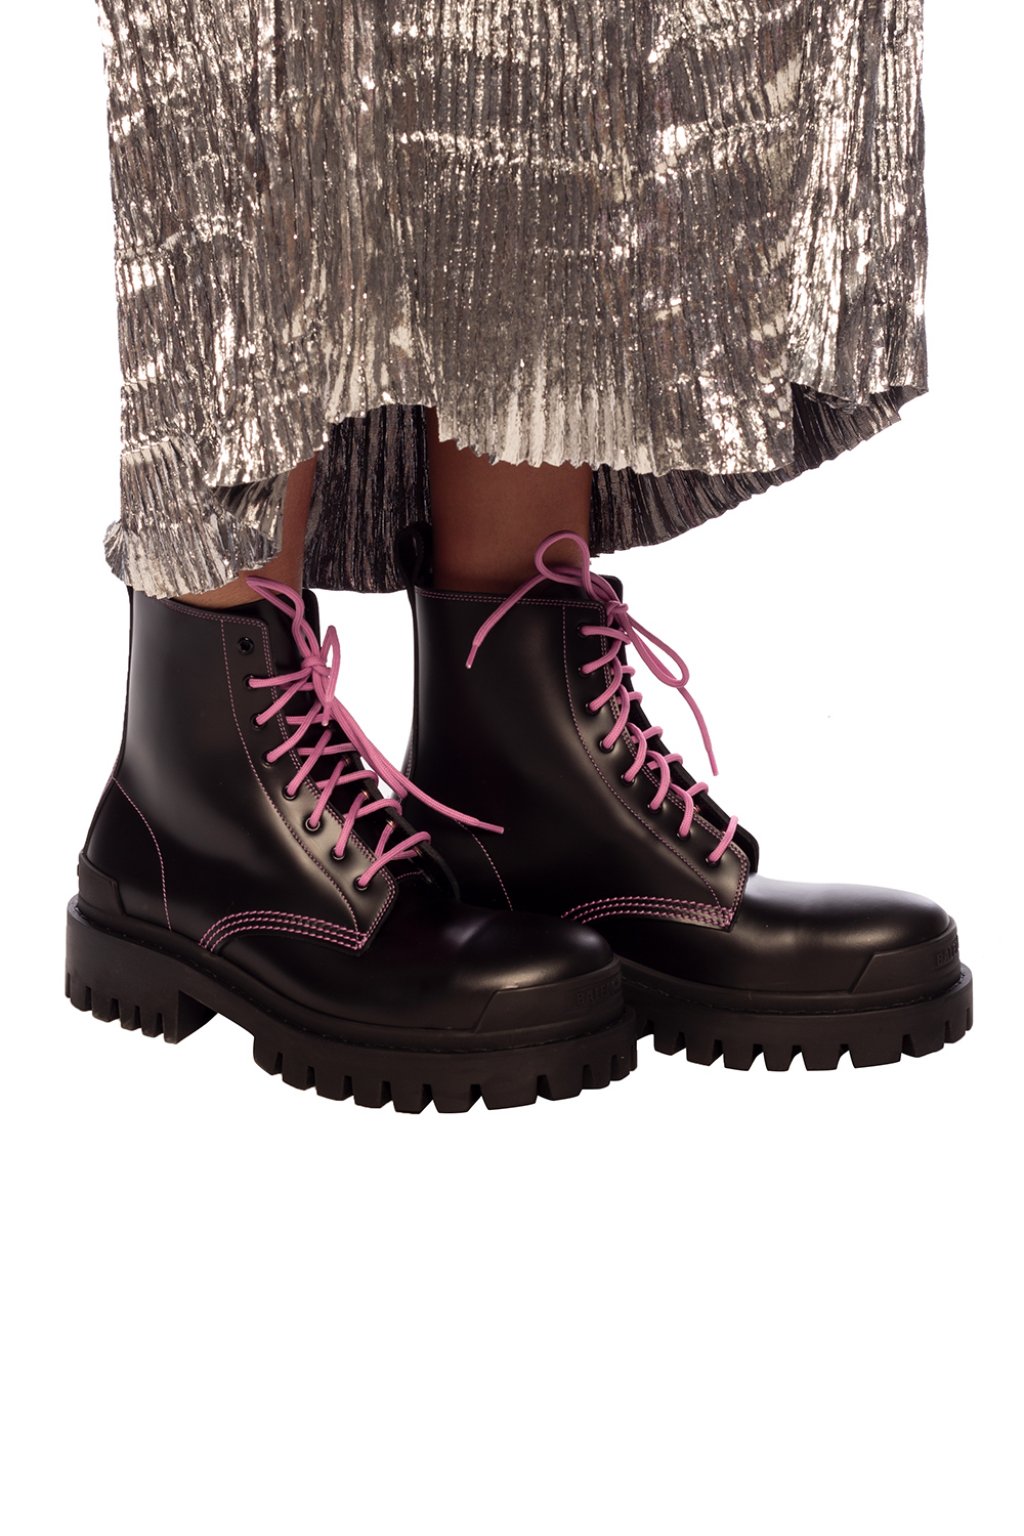 Balenciaga 'Strike' leather boots | Women's Shoes | Vitkac